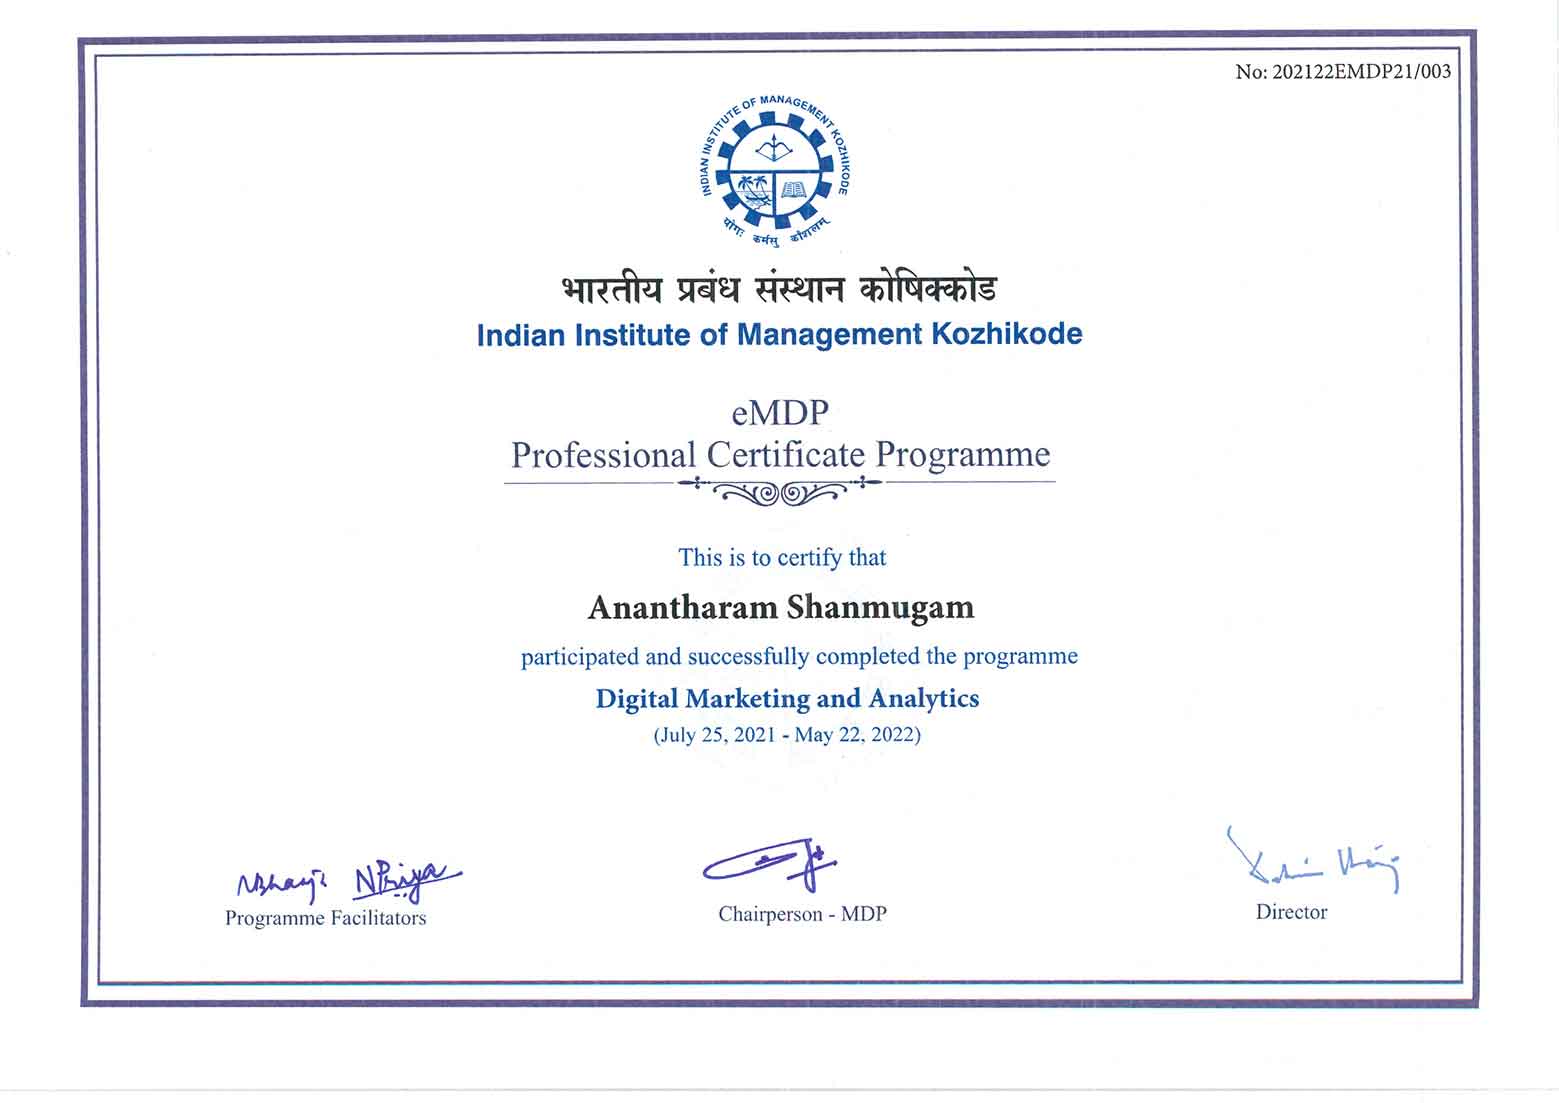 DigitalAnanth IIM Digital Marketing Certificate